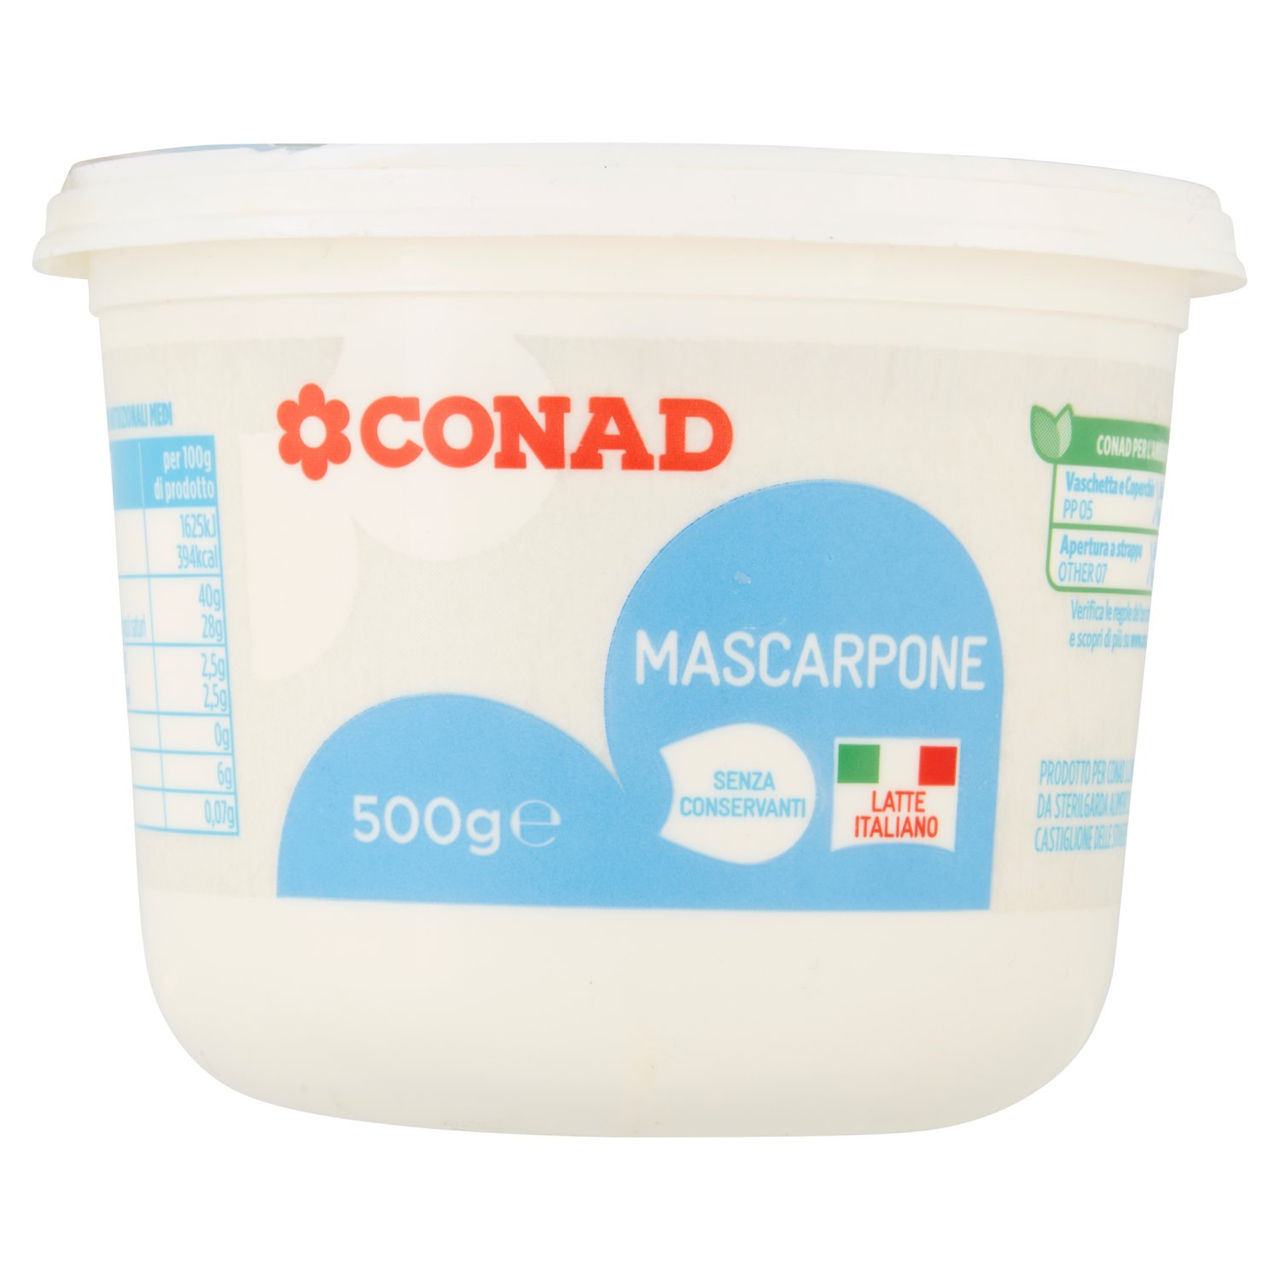 Mascarpone g. 500 Conad